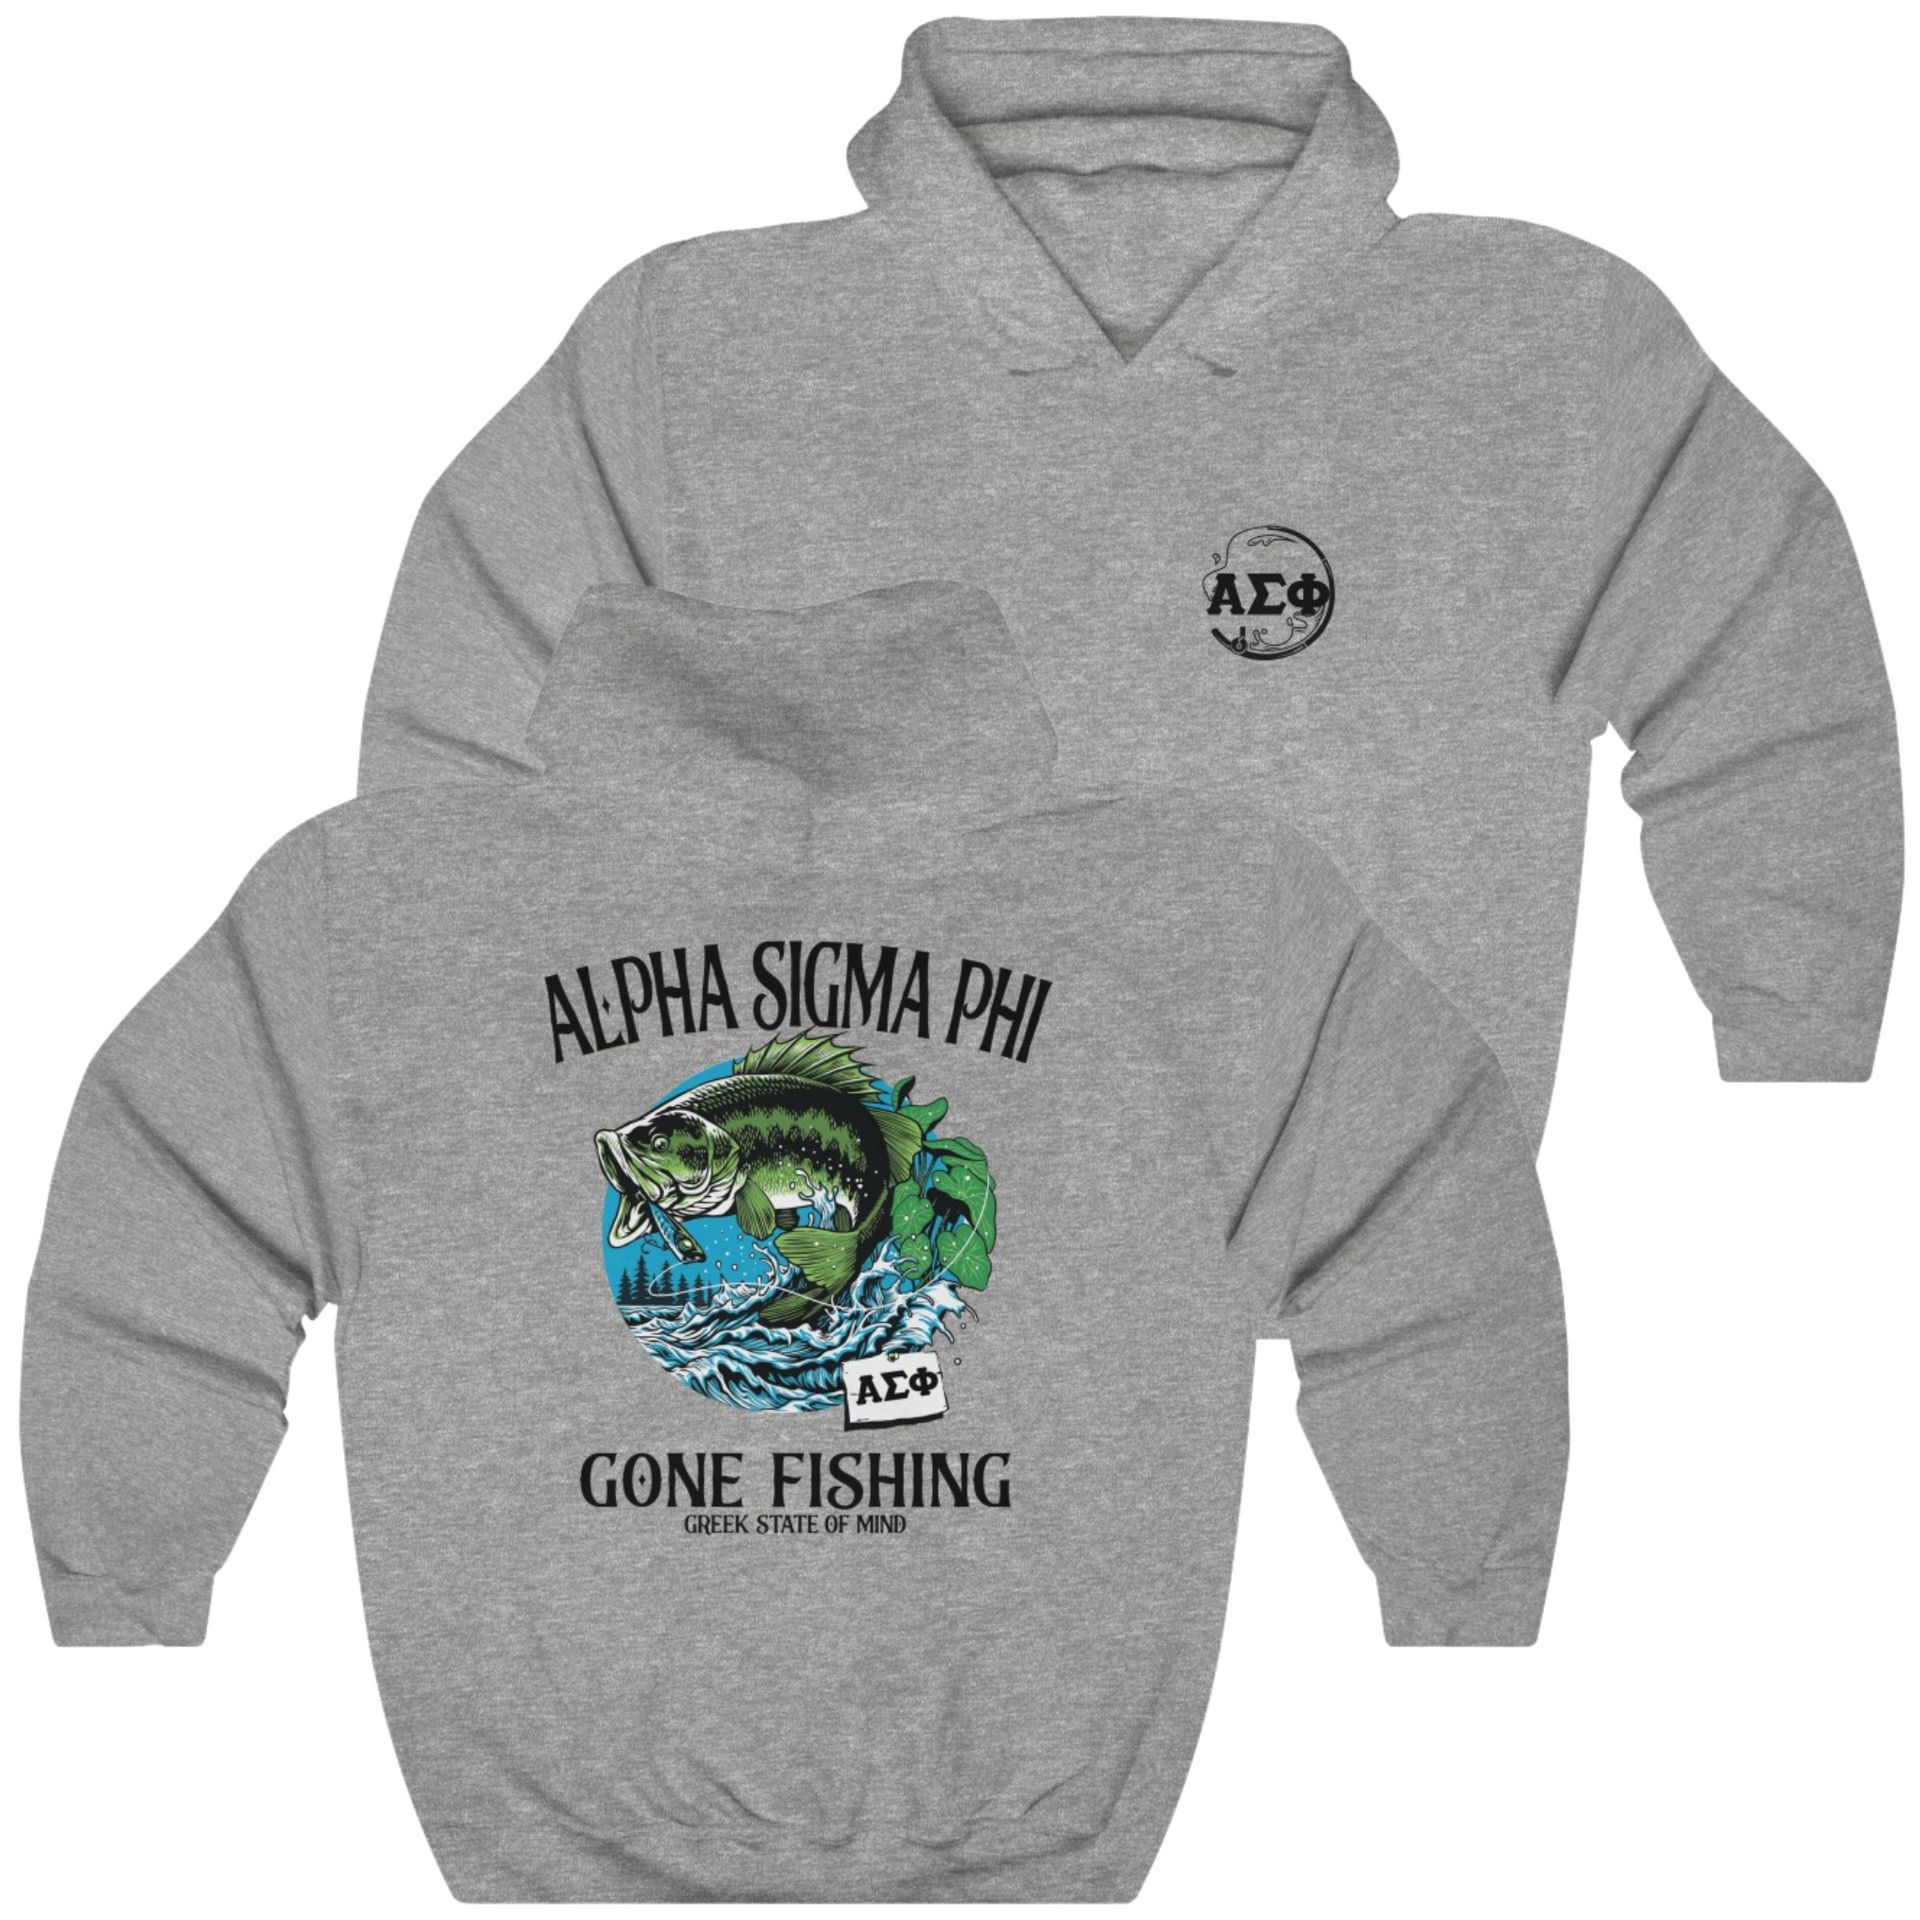 Grey Alpha Sigma Phi Graphic Hoodie | Gone Fishing | Alpha Sigma Phi Fraternity Shirt